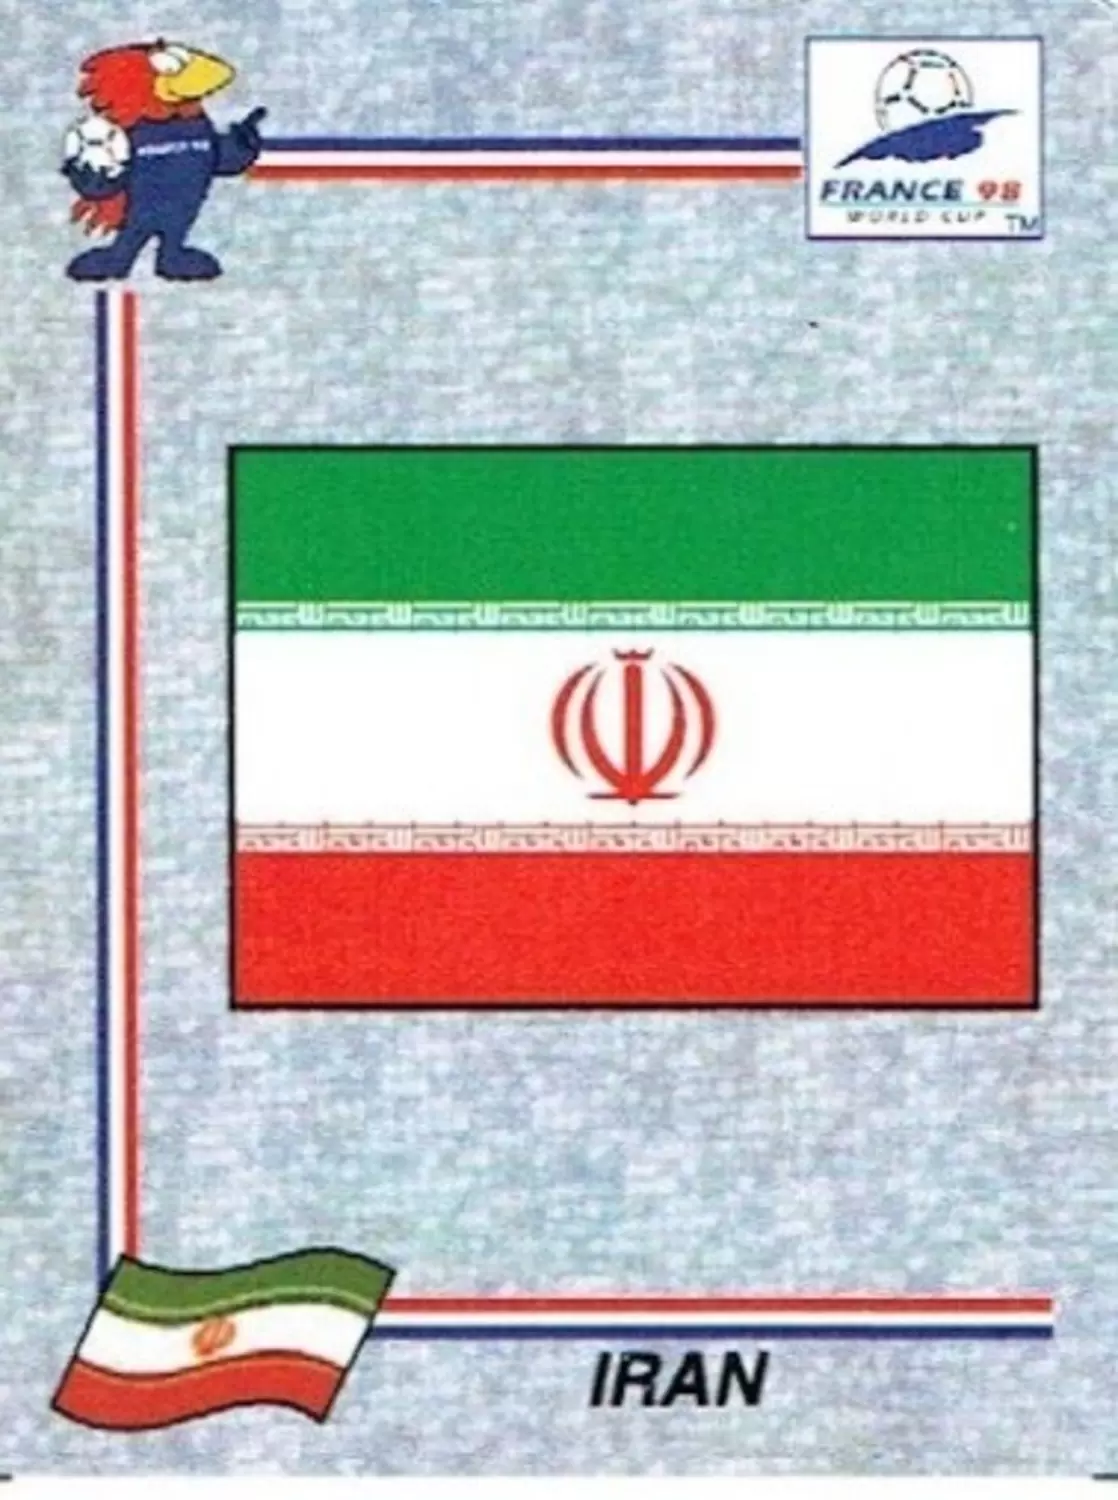 France 98 - Emblem Iran - IRN